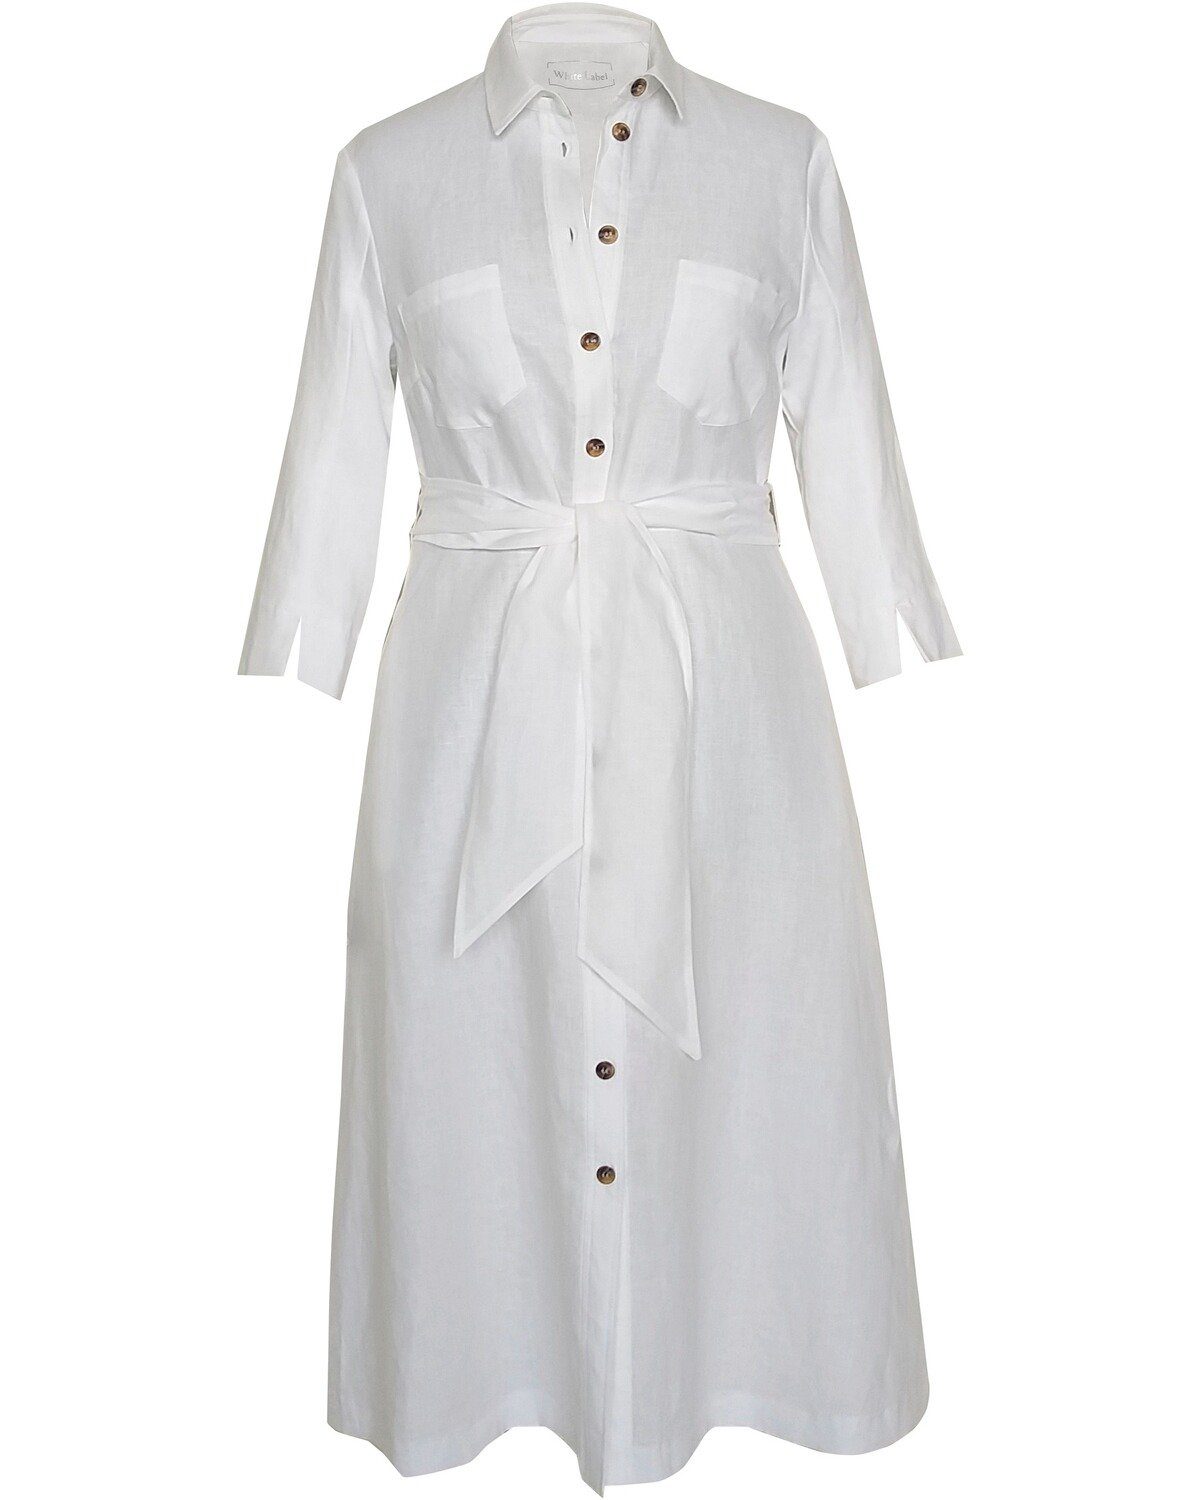 Weiß Label Maxikleid White Hemdblusenkleid